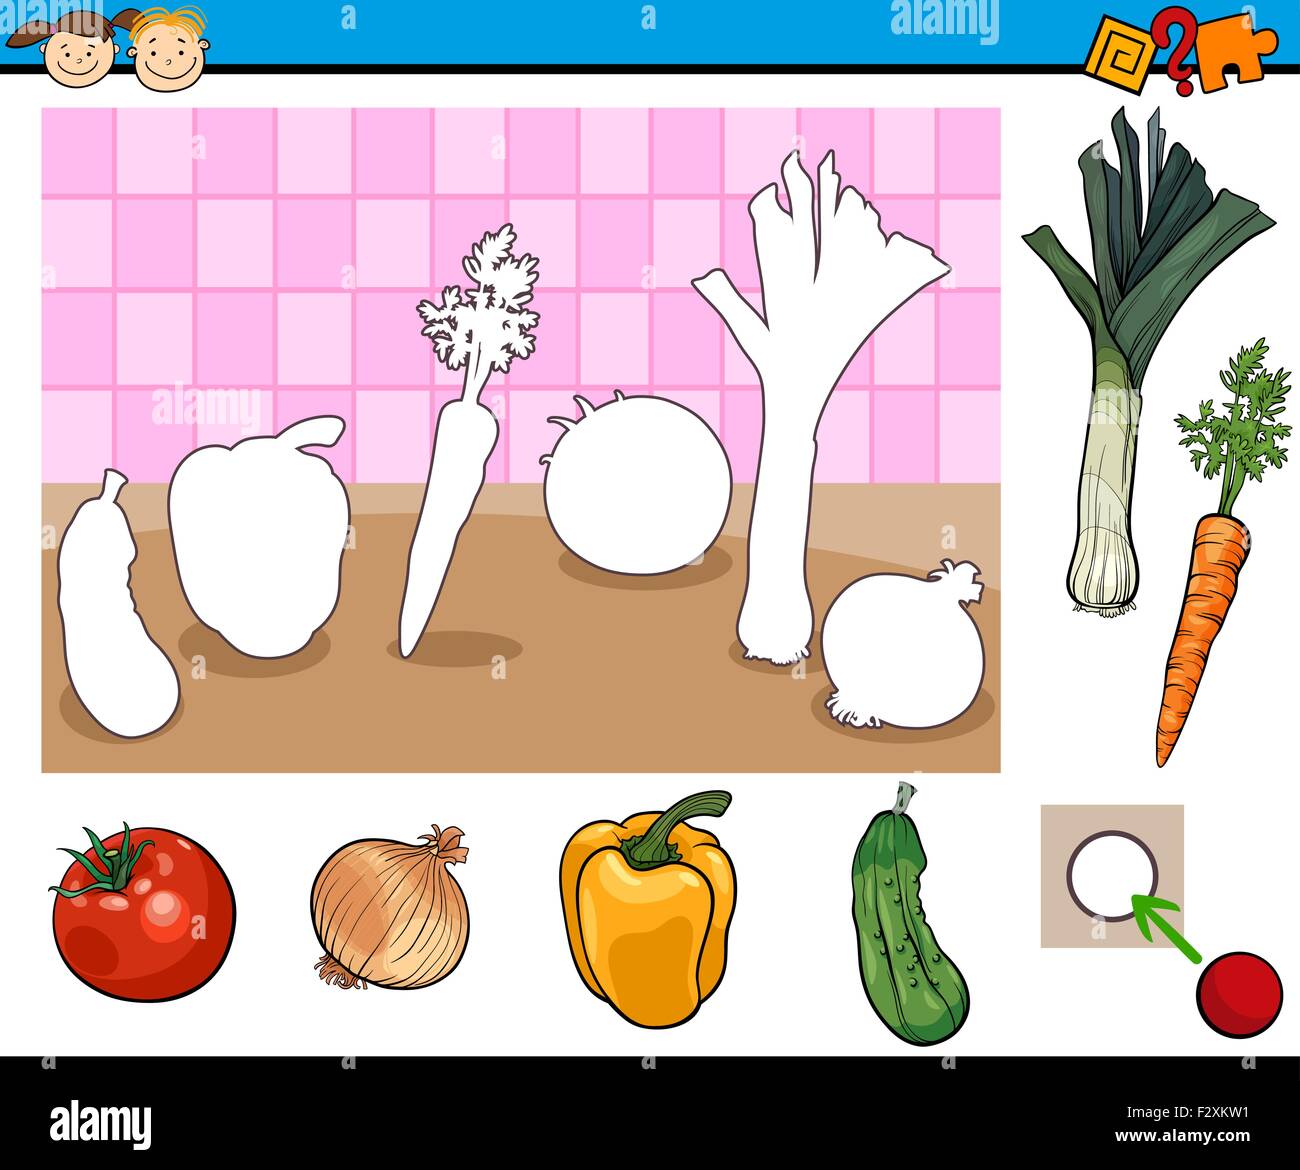 Cartoon Illustration of Educational Game for Preschool Children with Vegetables Stock Vector